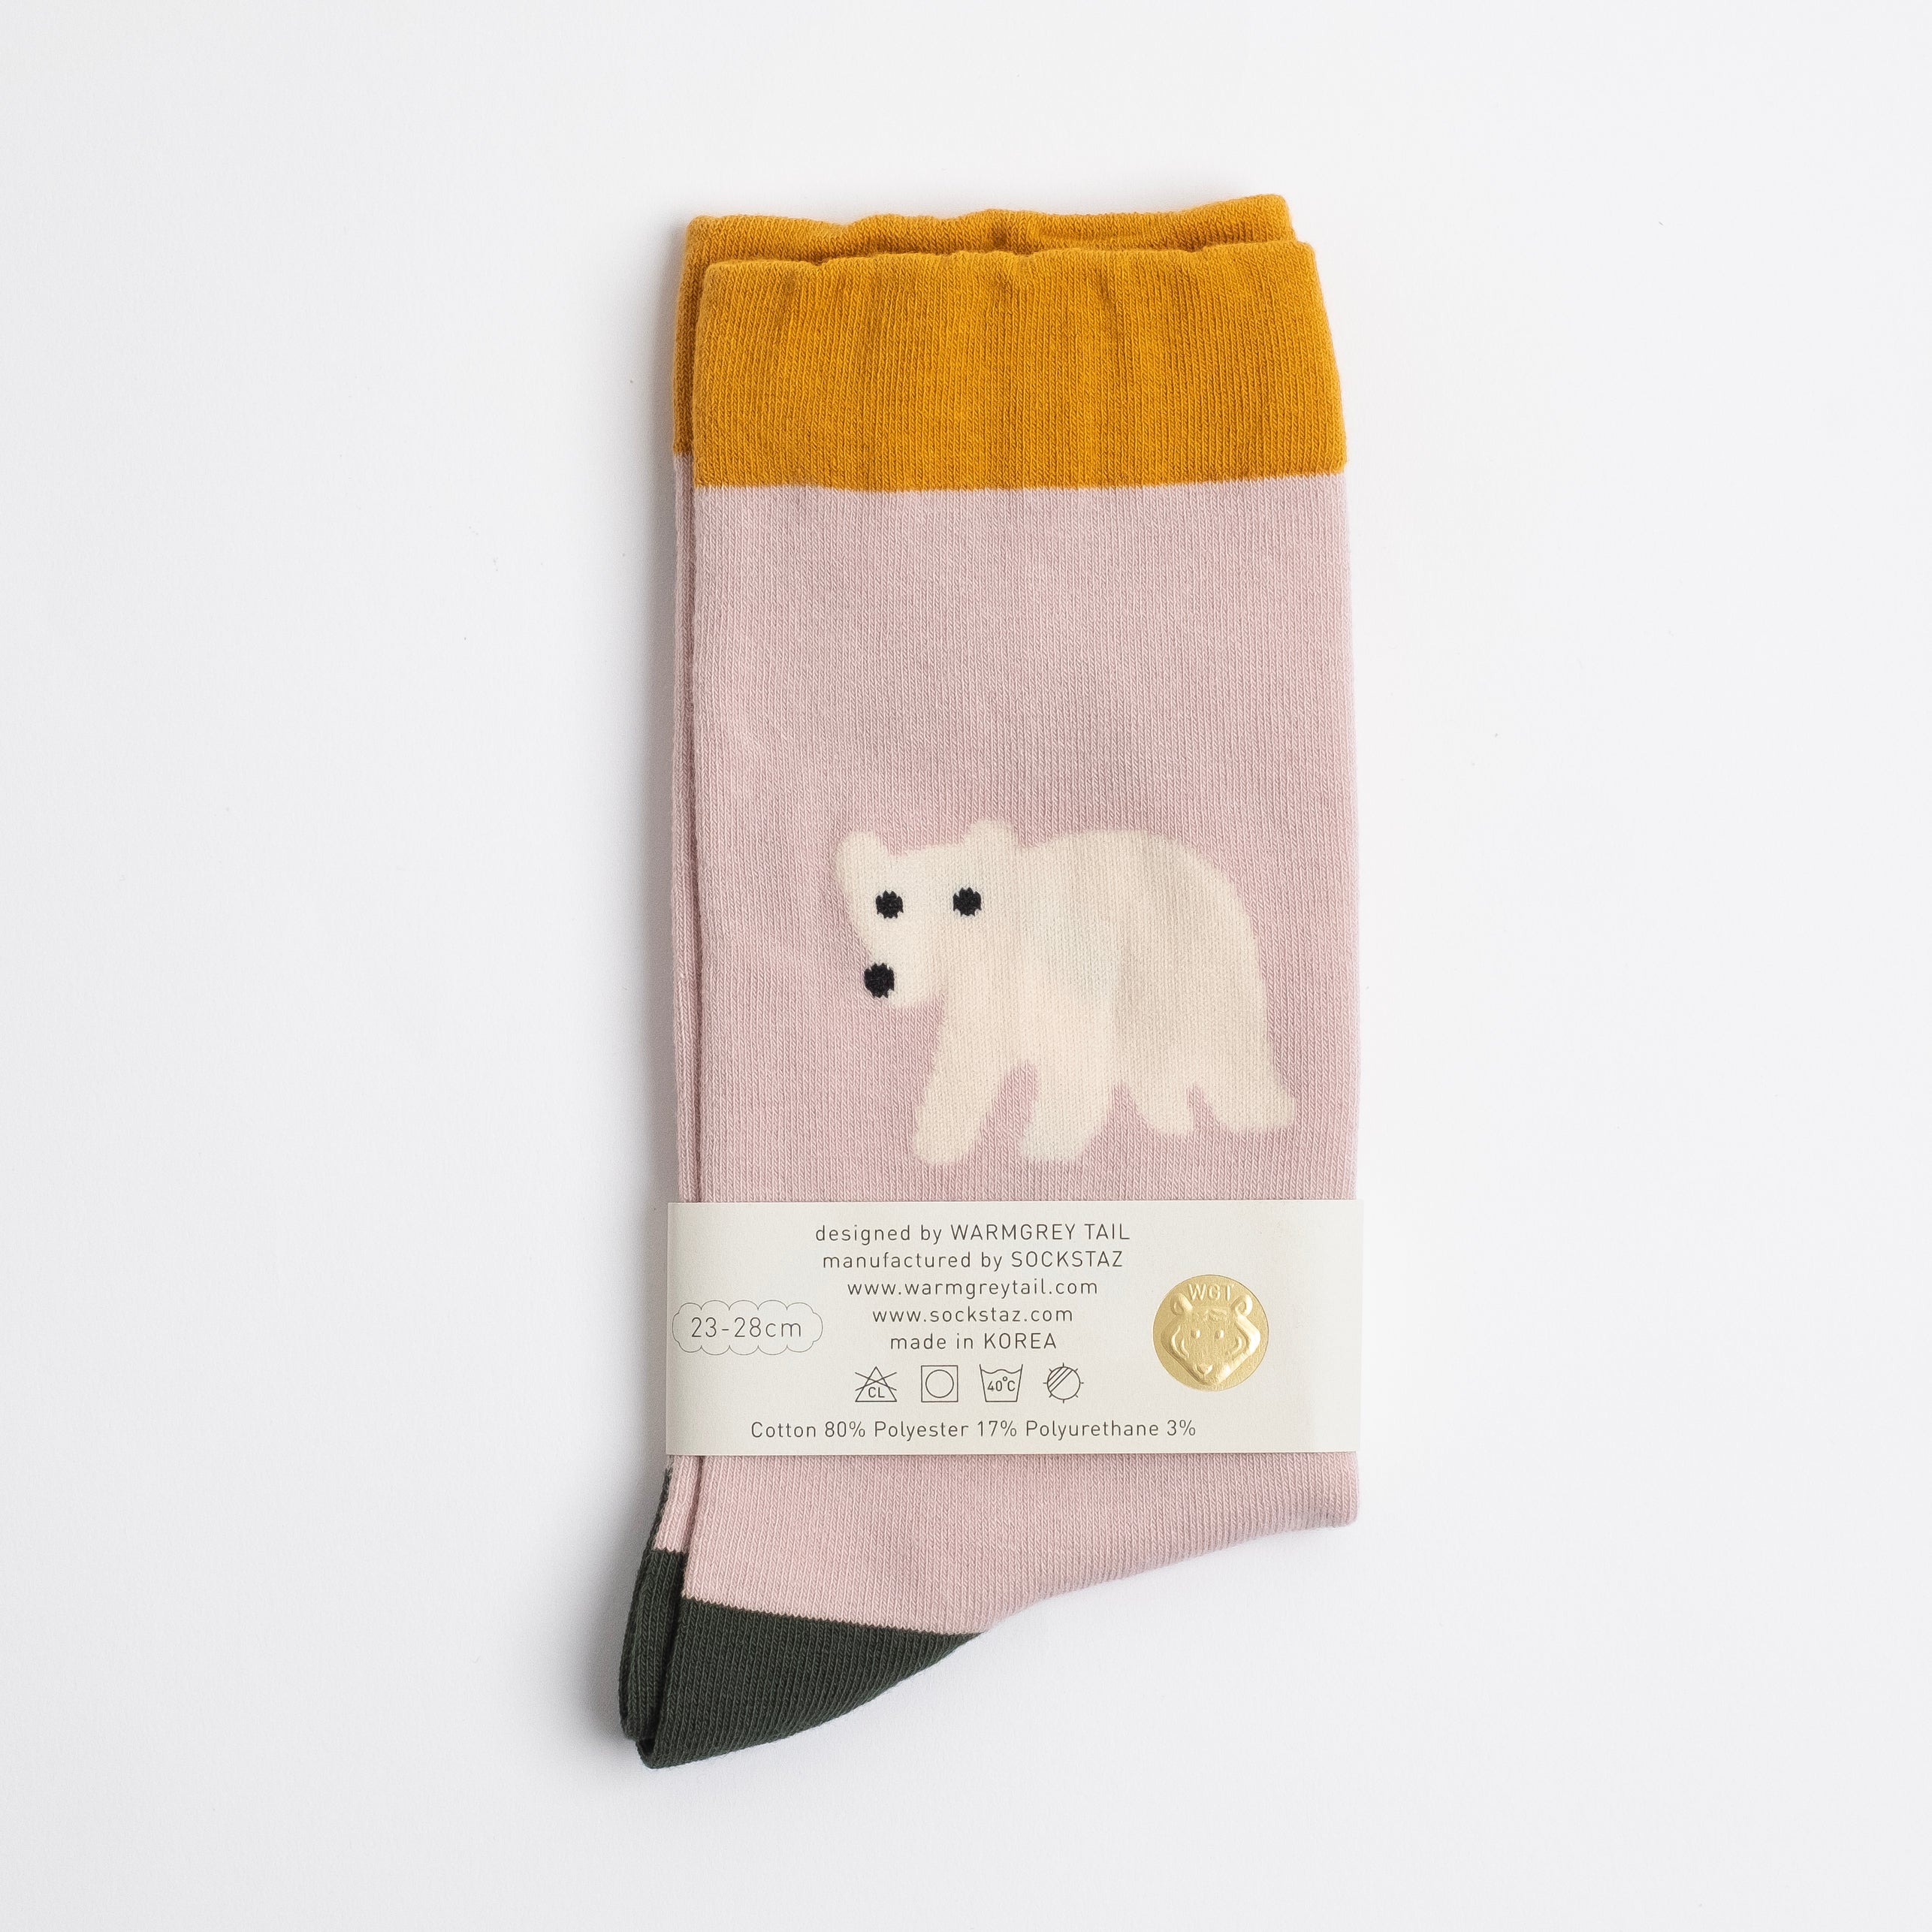 warmgrey-rolling-bear-socks-6.jpg